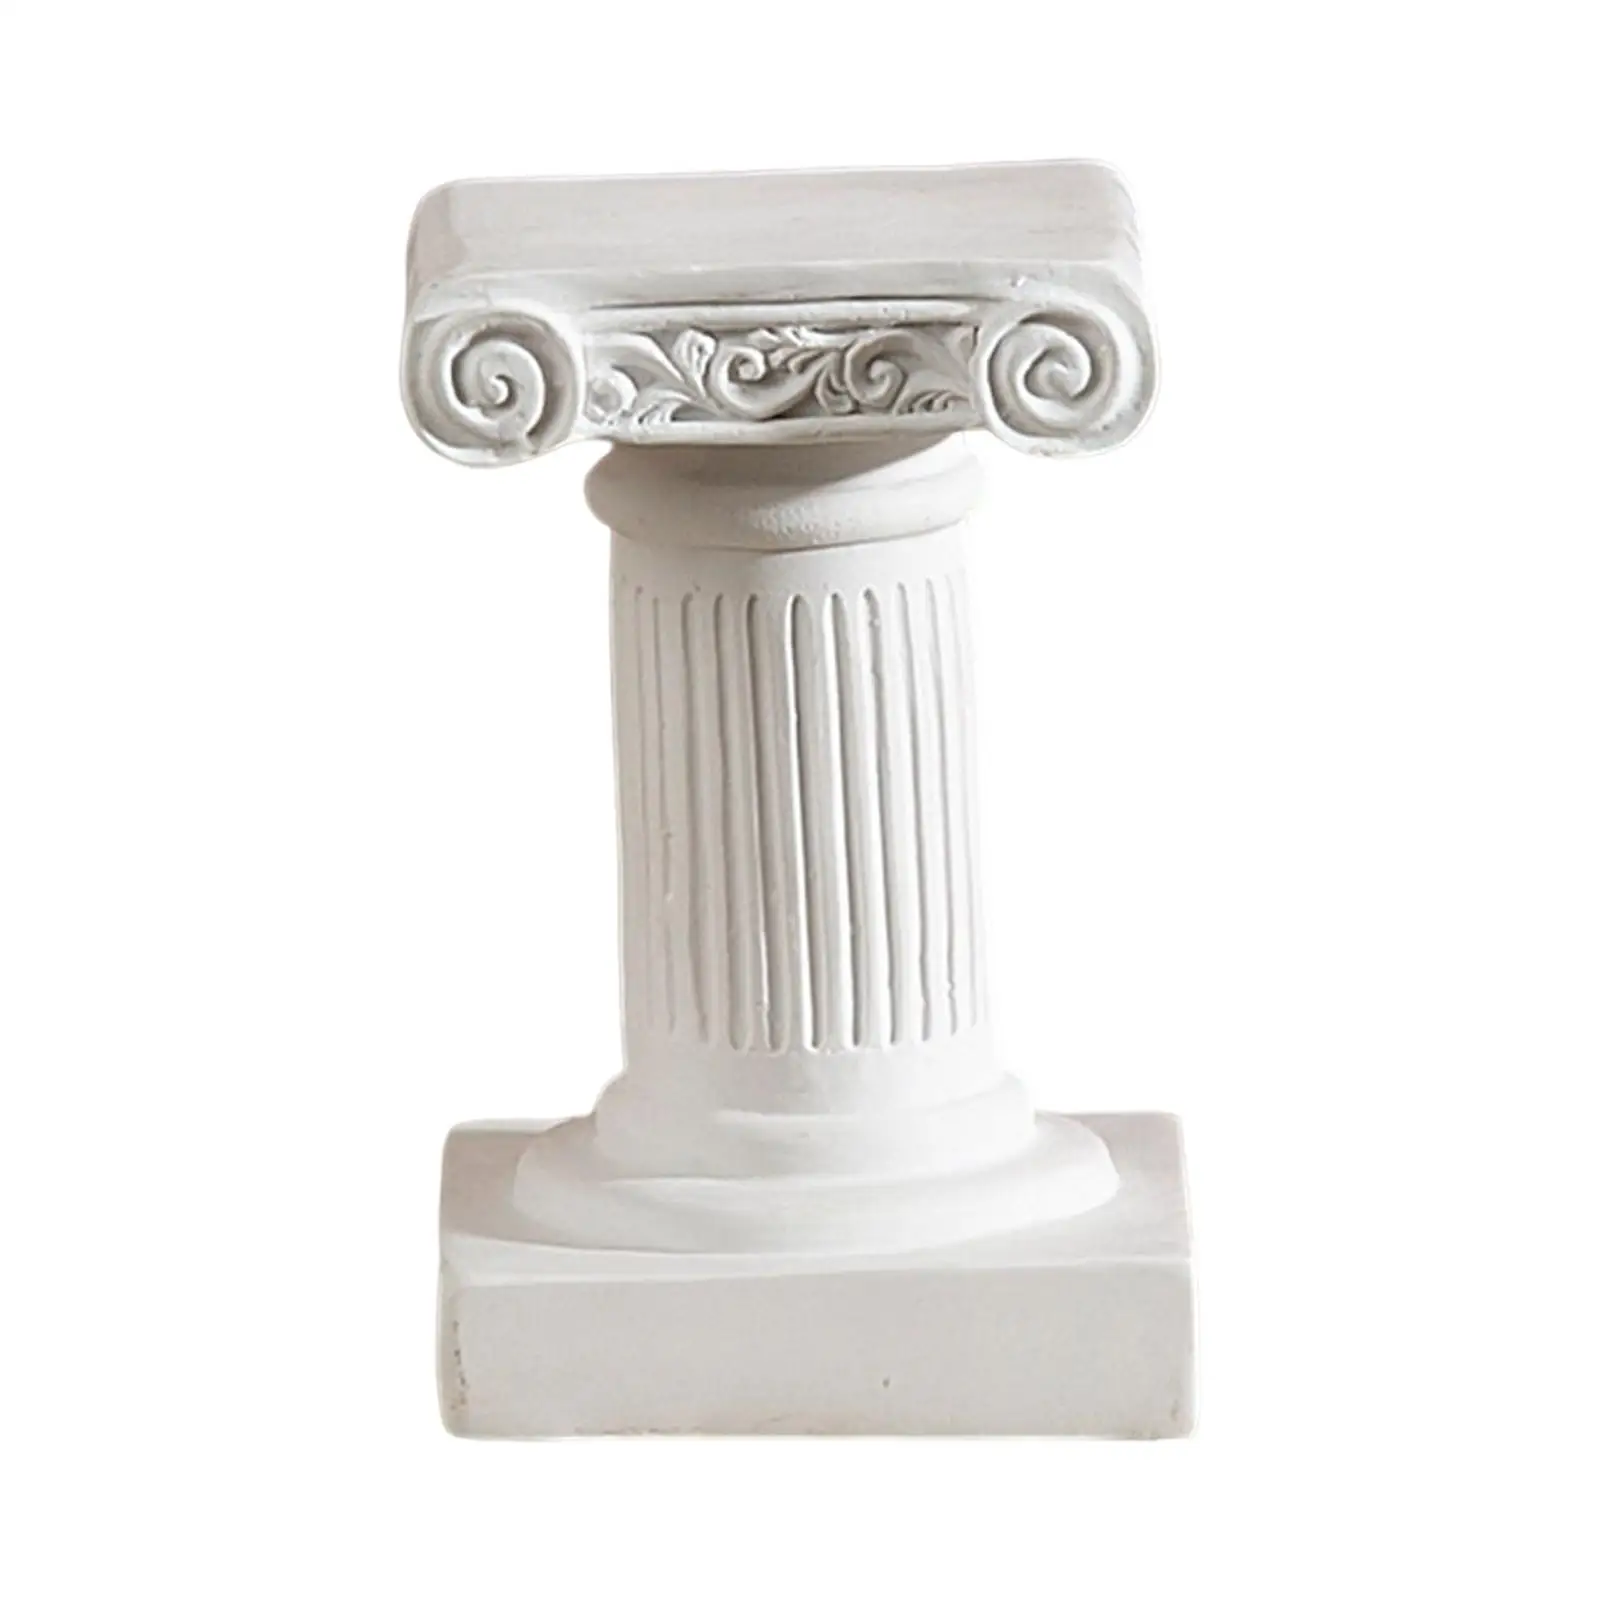 Mini Greek Columns Alabaster Sculpture Cast Resin Home Decor Table Centerpieces White Roman Columns for Courtyard Art Wedding